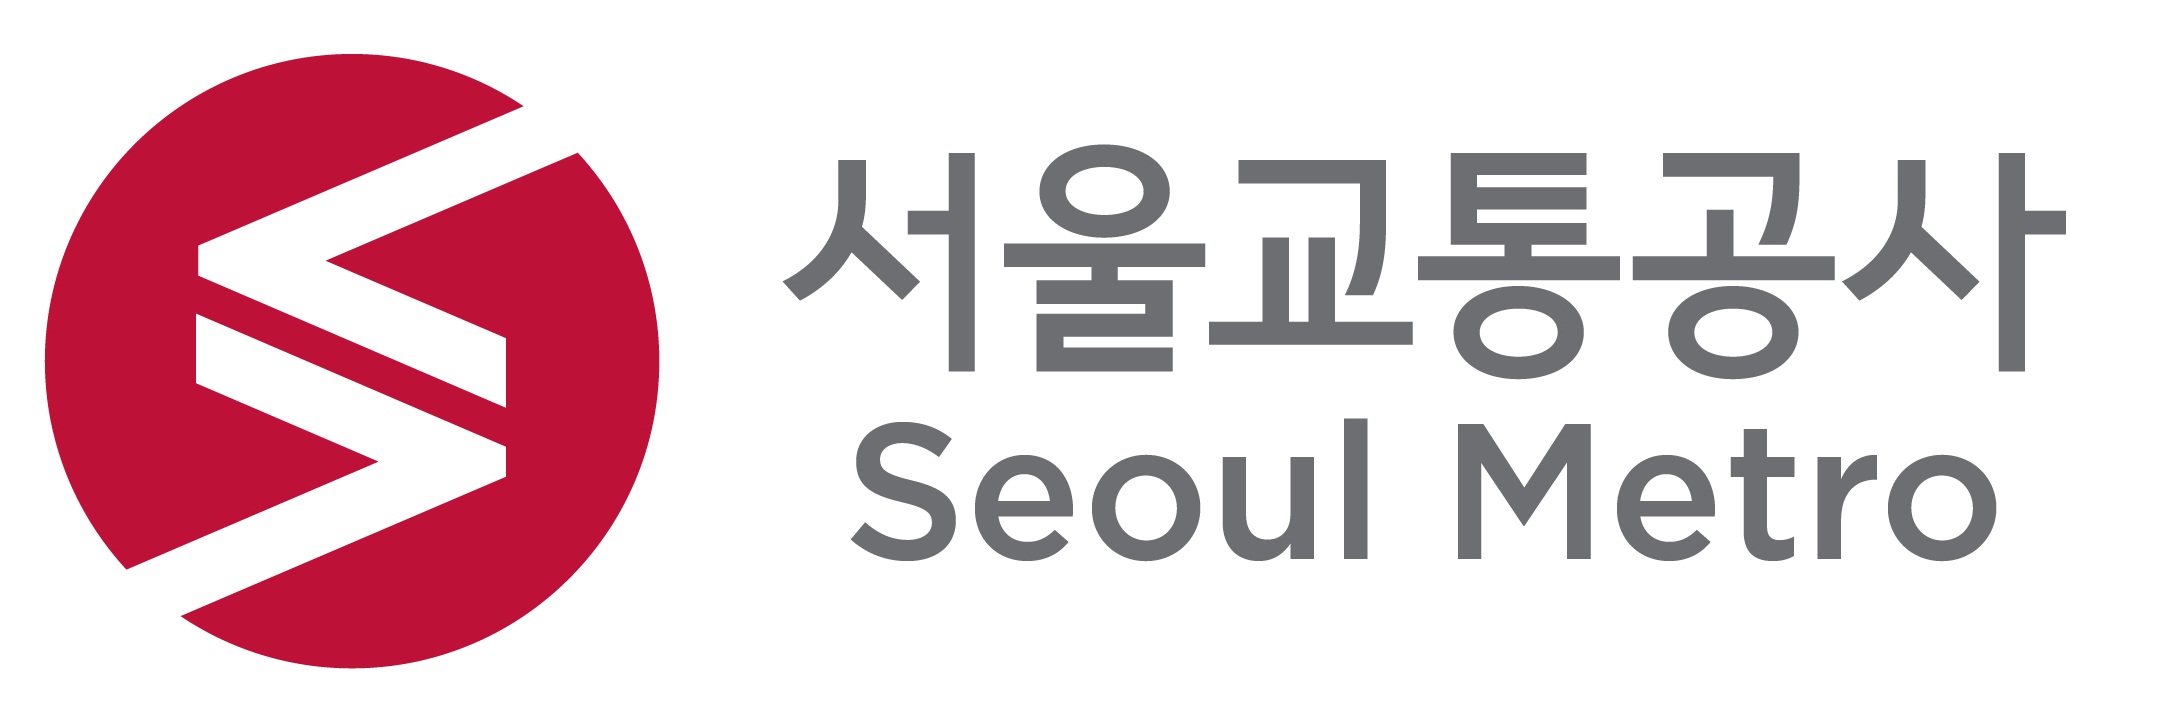 S(Safety, Service, Seoul 의미)를 화살표로 표현하여 세계를 향하고(<) 시민을 향하는(>) 공사 이미지를 구축